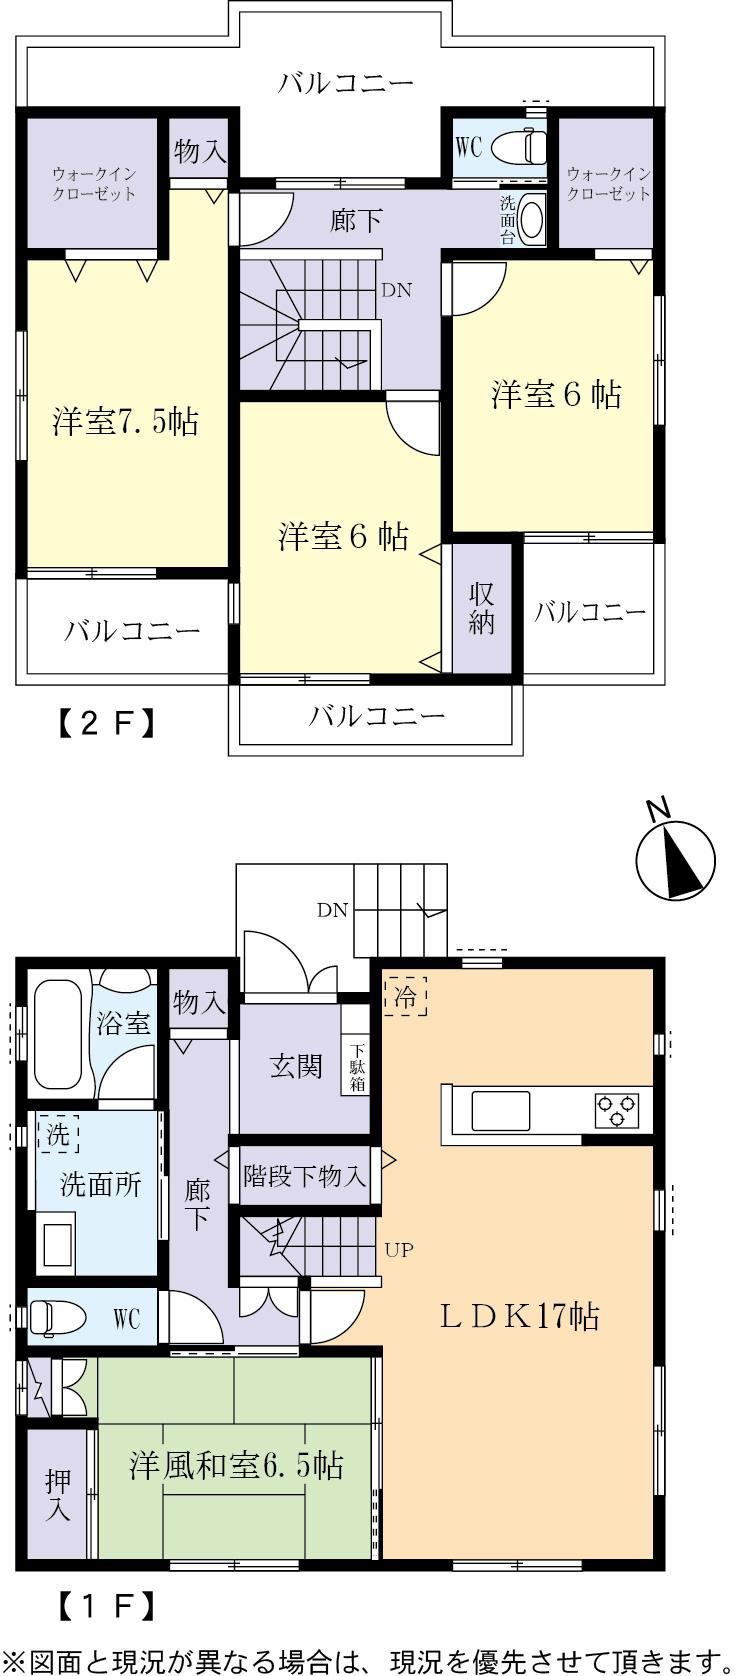 Floor plan. 29,800,000 yen, 4LDK, Land area 166.74 sq m , Building area 112.62 sq m